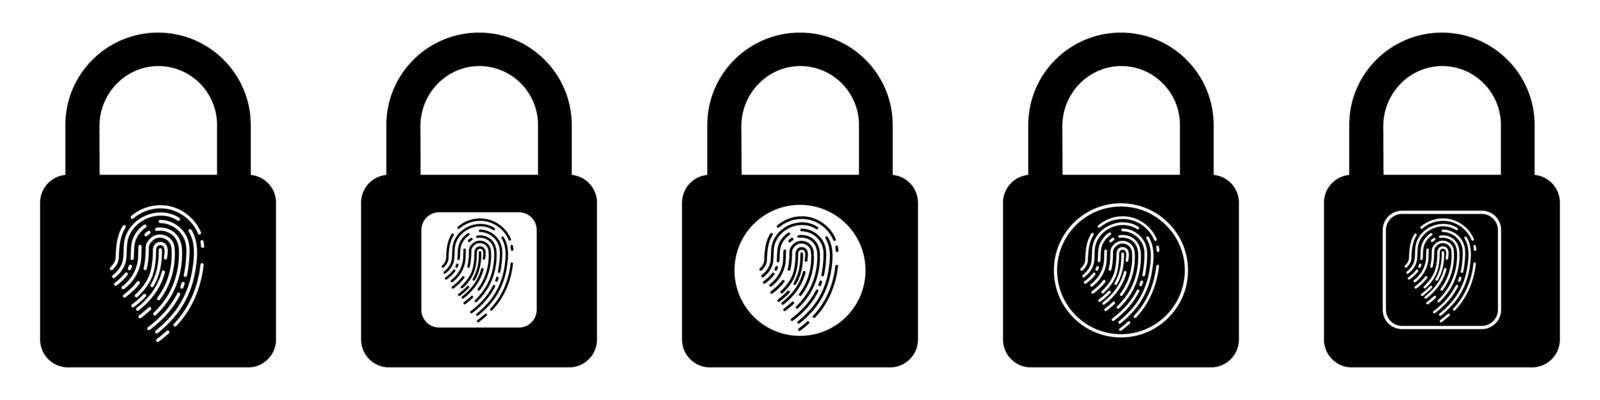 Fingerprint padlock icon. Scan fingerprint icon. Security concept icon. by Chekman